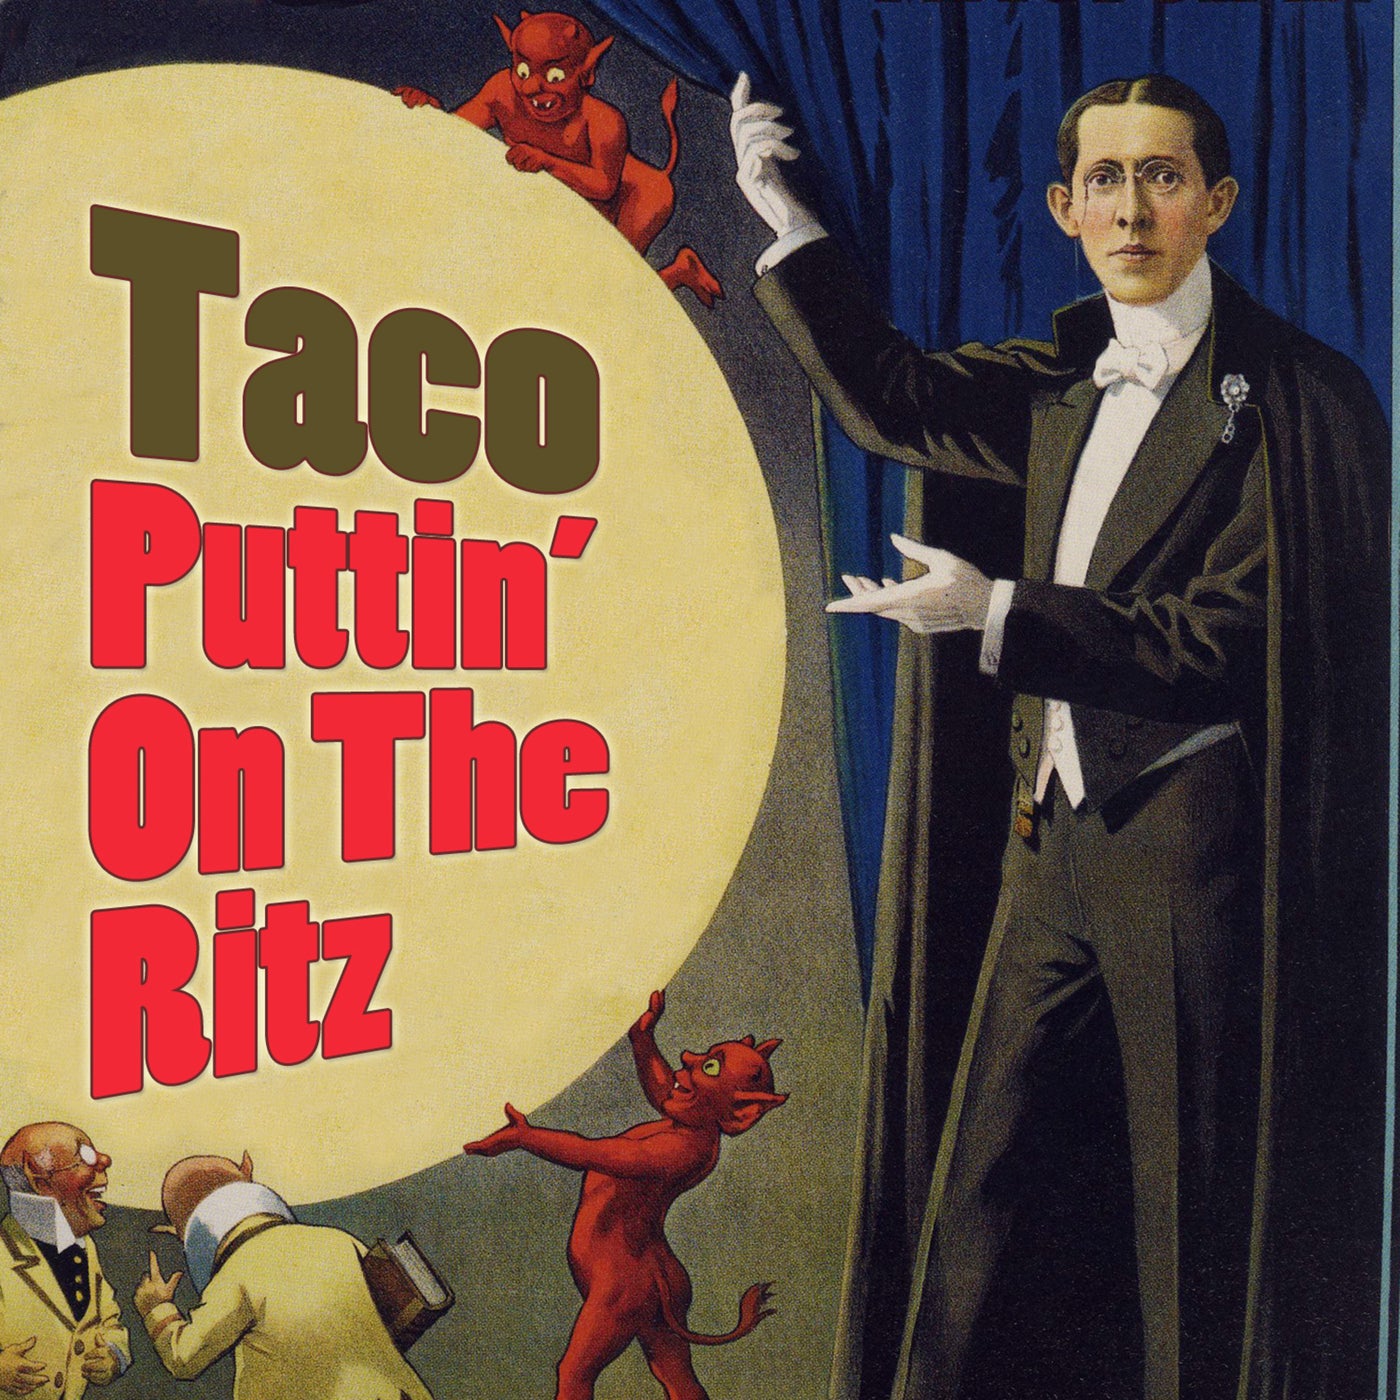 Окерси тако puttin. Ирвинг Берлин, Taco - Puttin' on the Ritz. Тако Путтин он. Taco Puttin on the Ritz. Taco Puttin' on the.